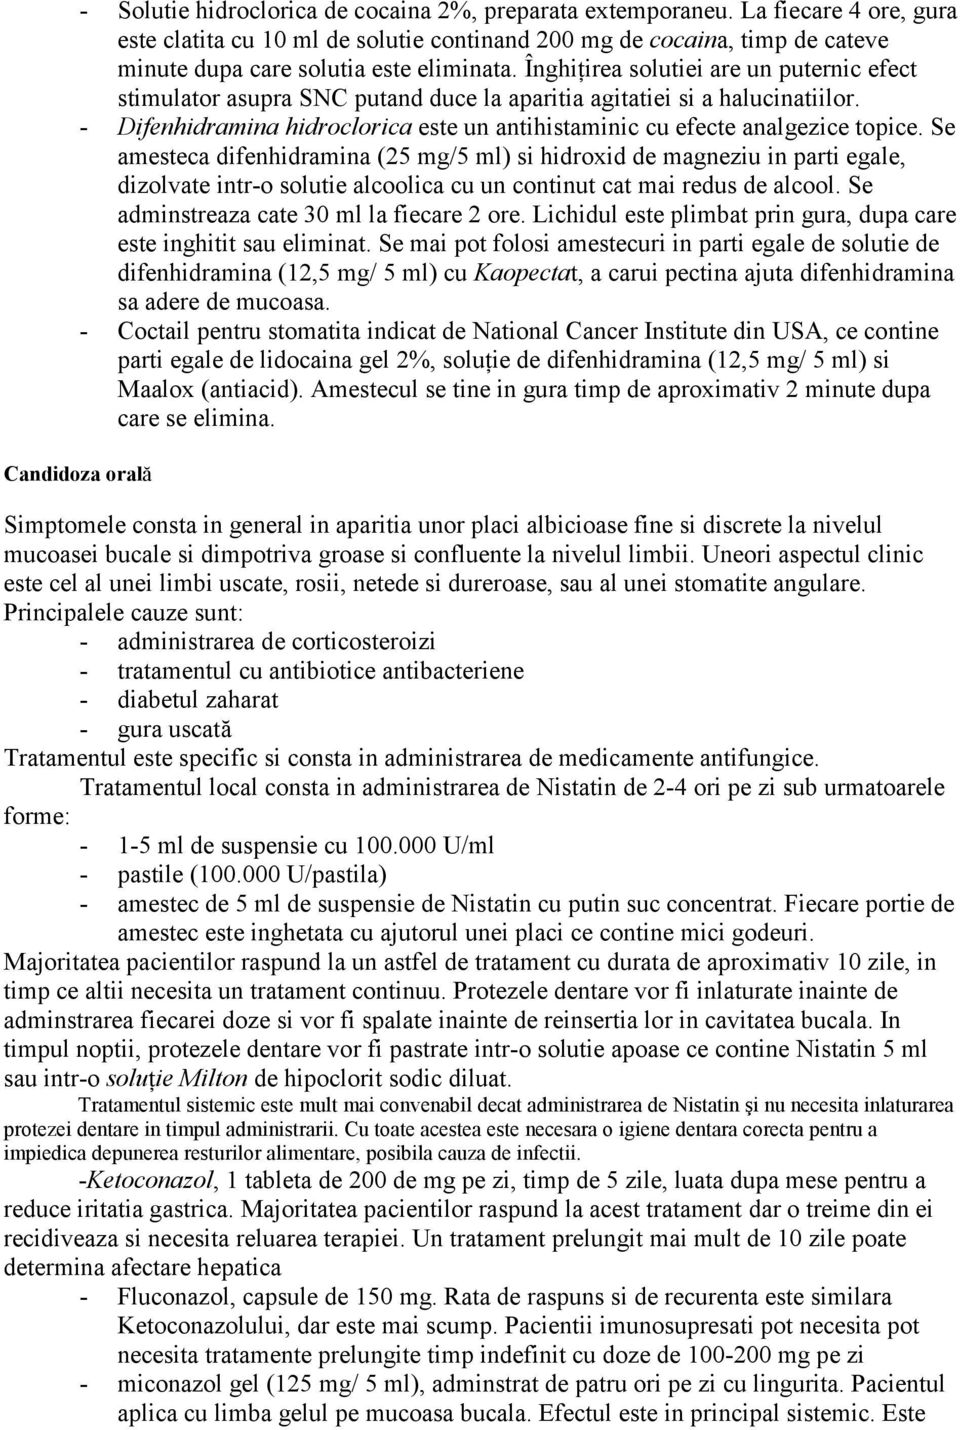 Montelukast 4 mg -cpr.mast. x 30 - Actavis